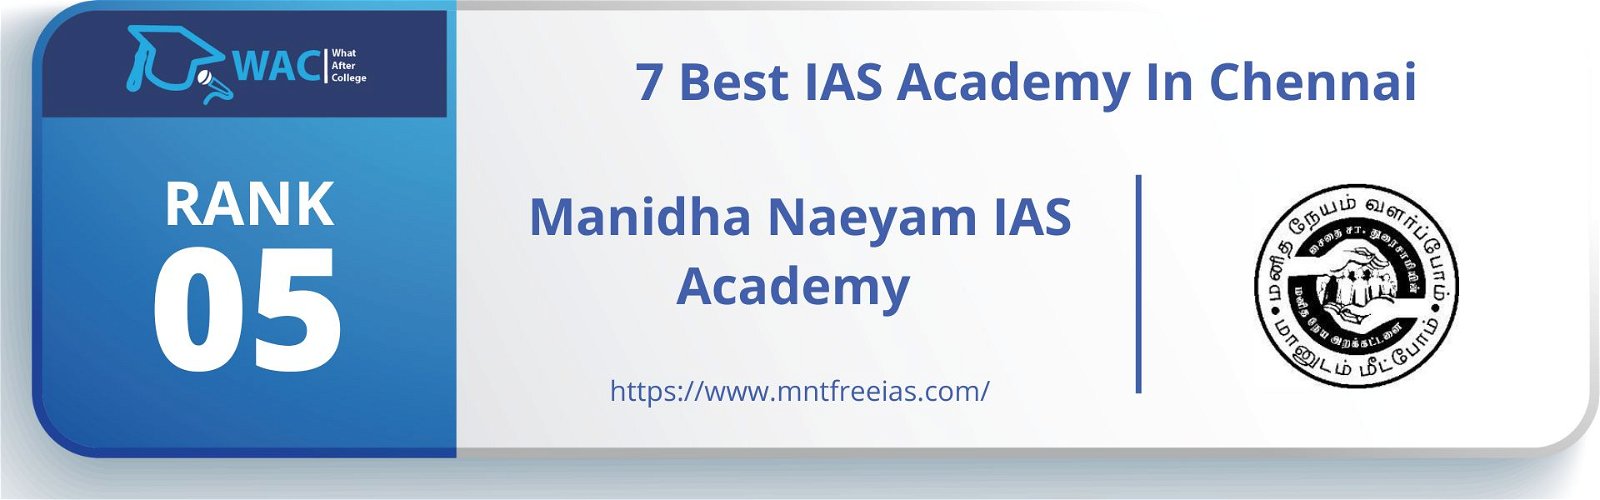 ias academy in chennai